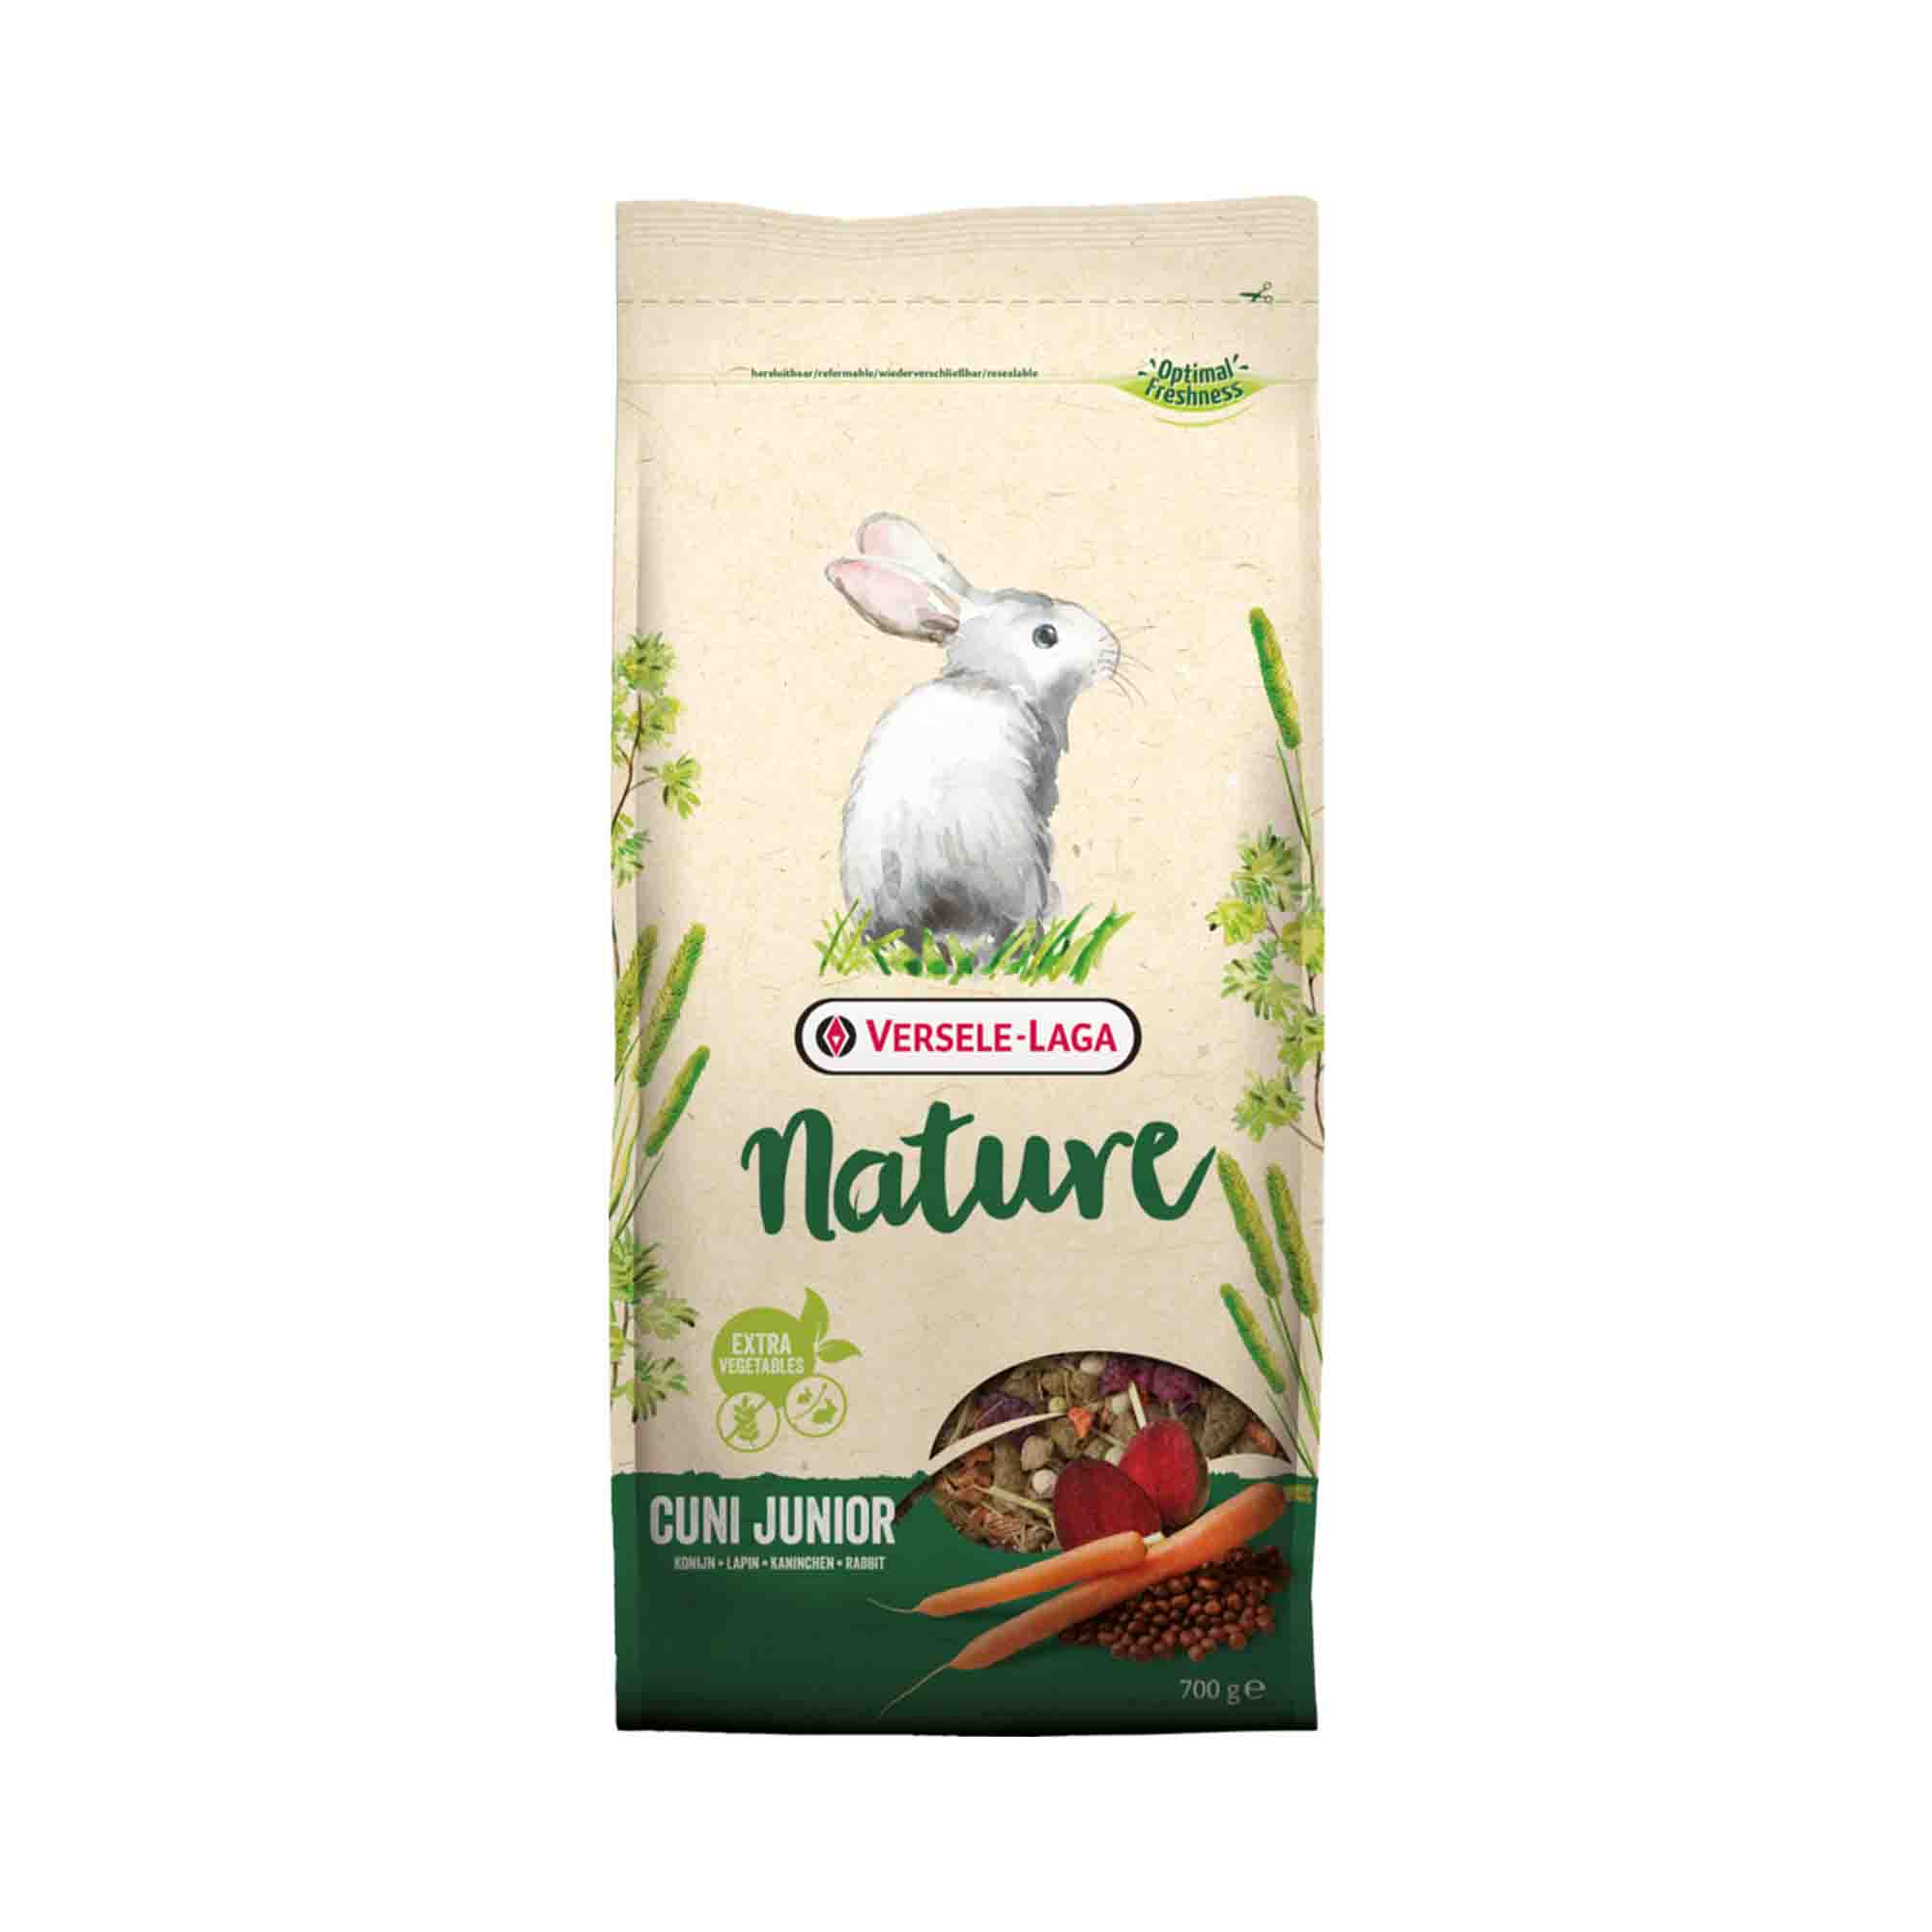 Versele-Laga Nature Cuni Junior rabbit food